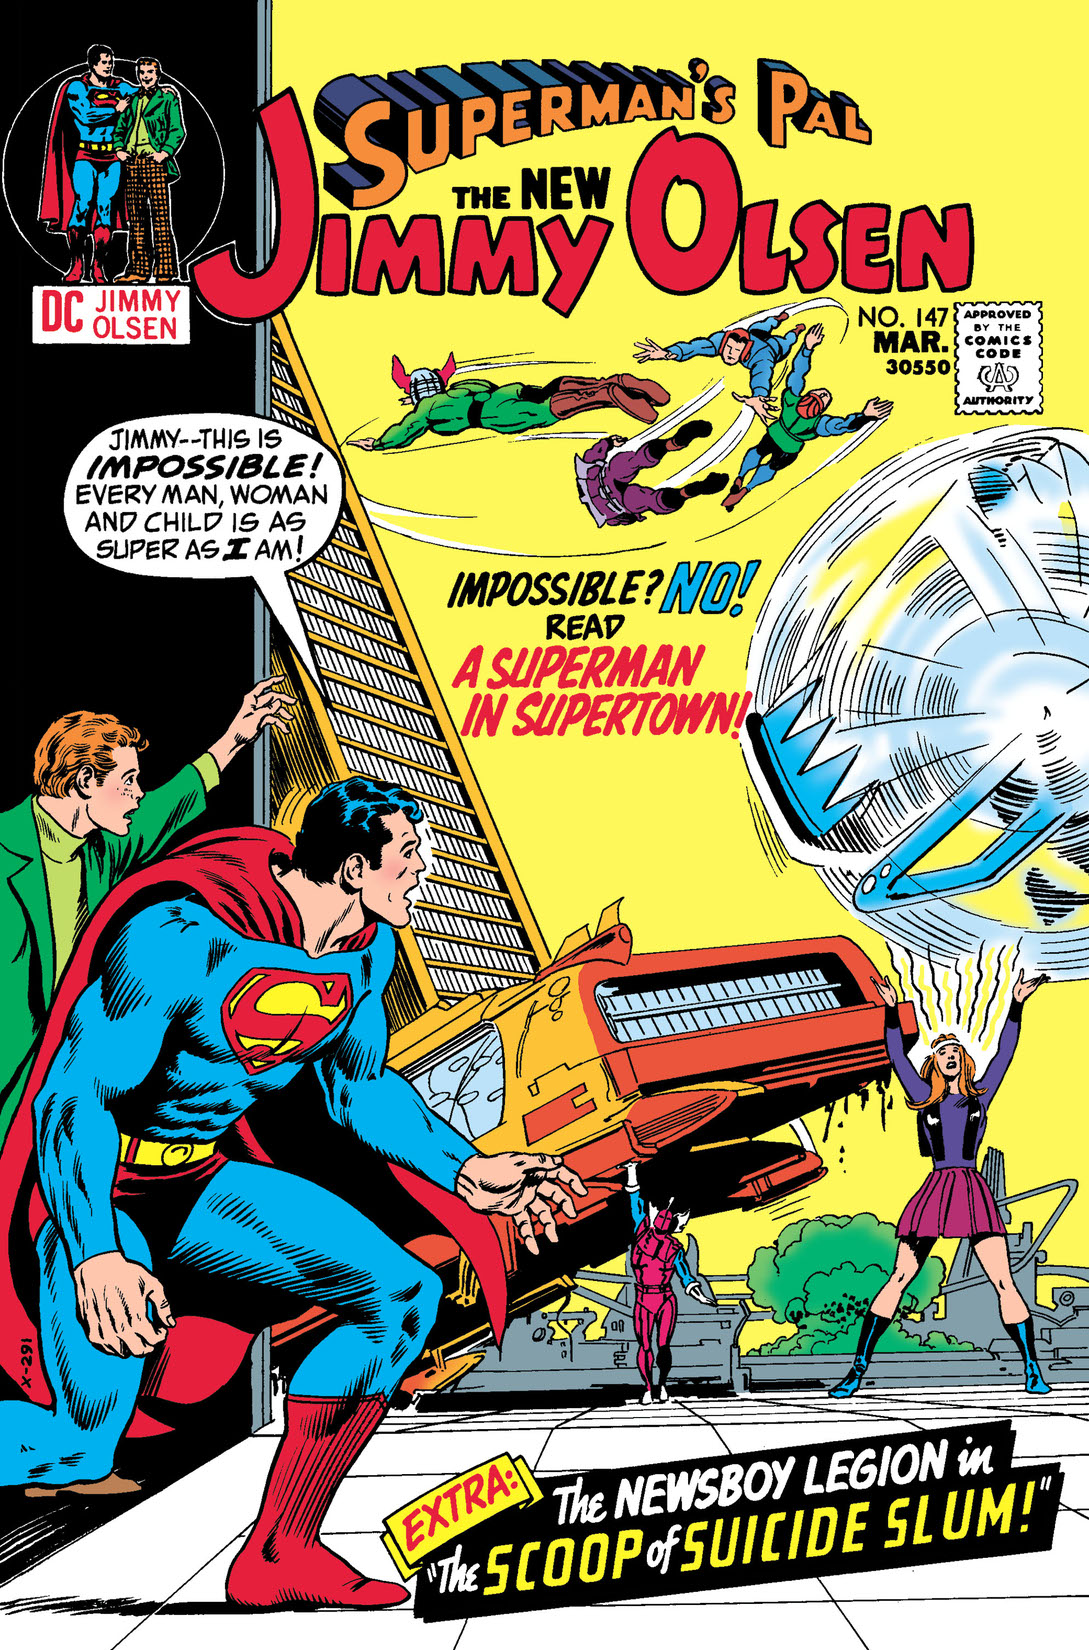 Superman's Pal, Jimmy Olsen #147 preview images